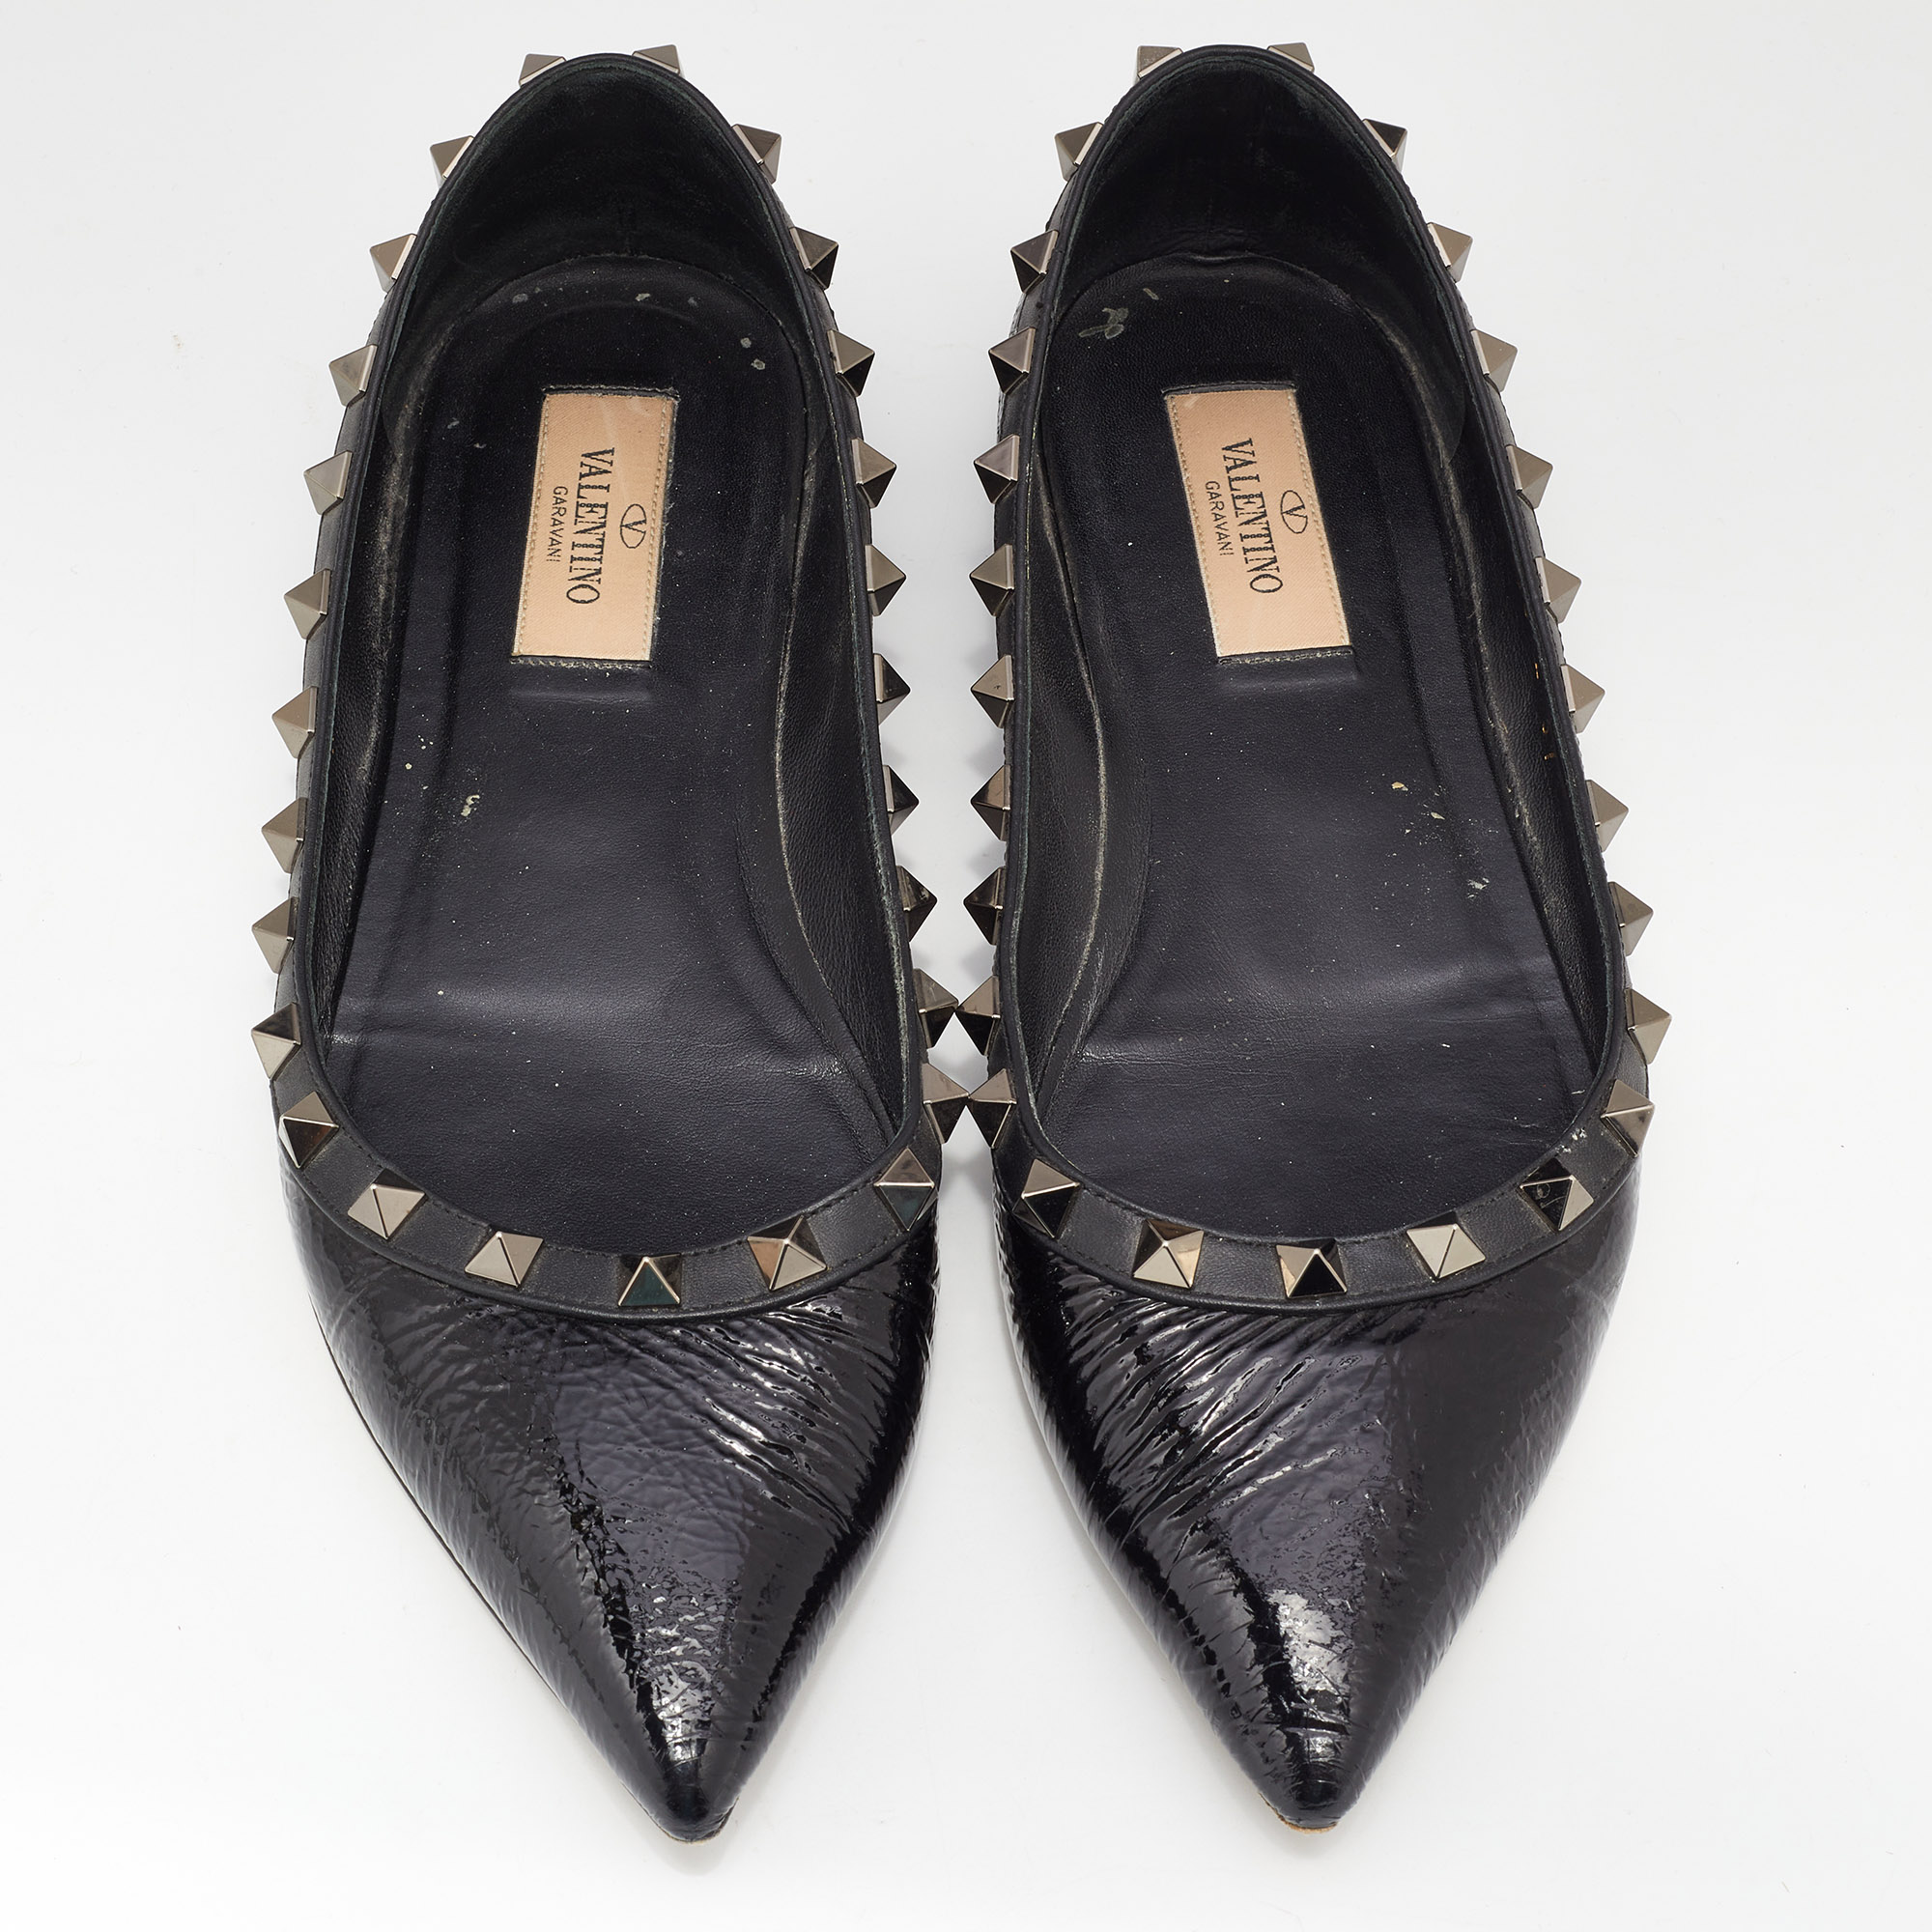 Valentino Black Patent Leather Rockstud Ballet Flats Size 37